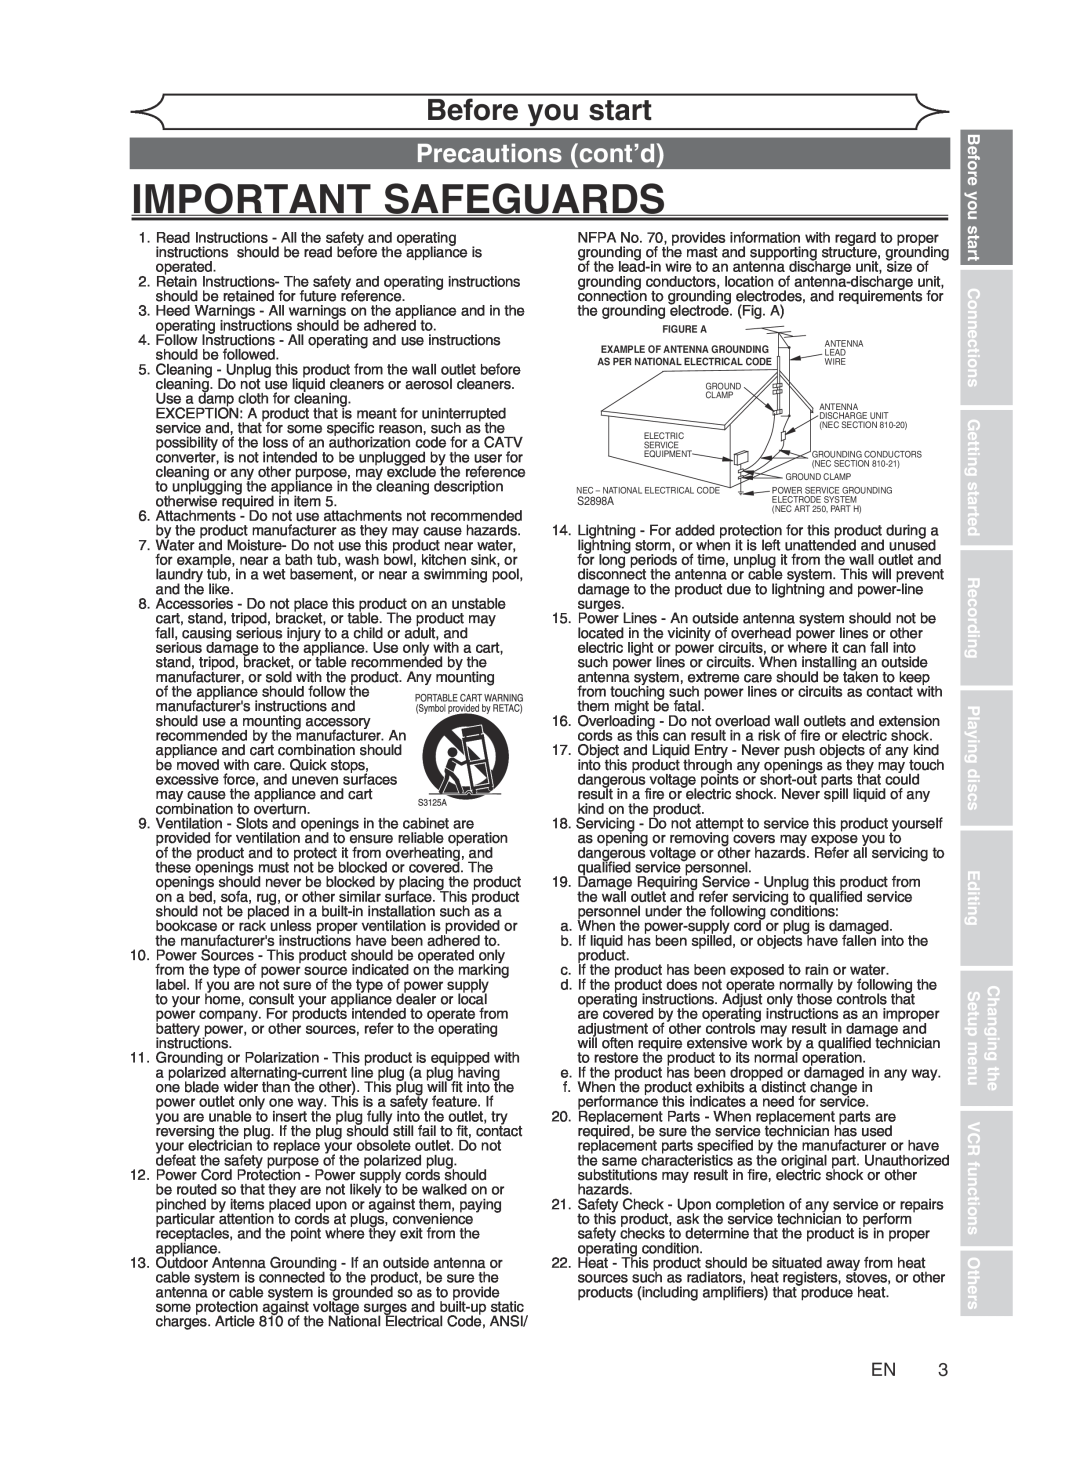 Magnavox cmwR20v6 manual Precautions cont’d, Important Safeguards, Before you start 